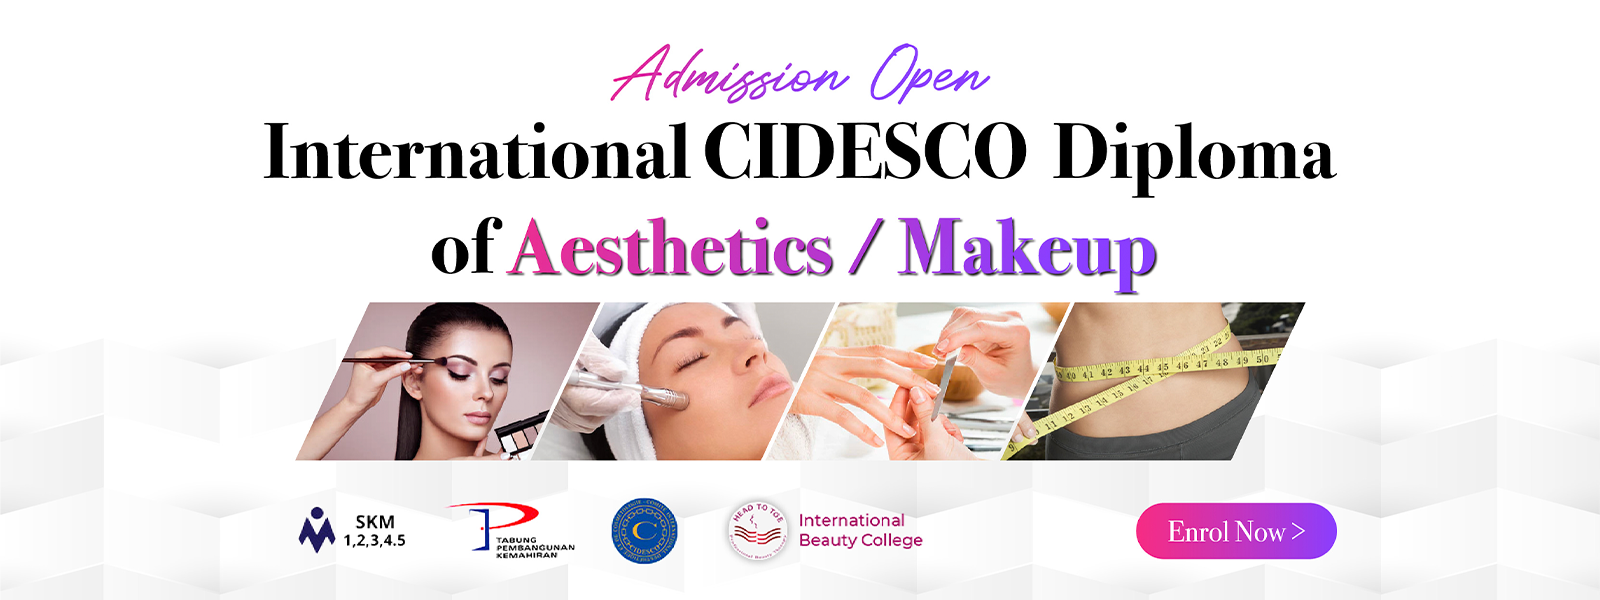 International CIDESCO Diploma